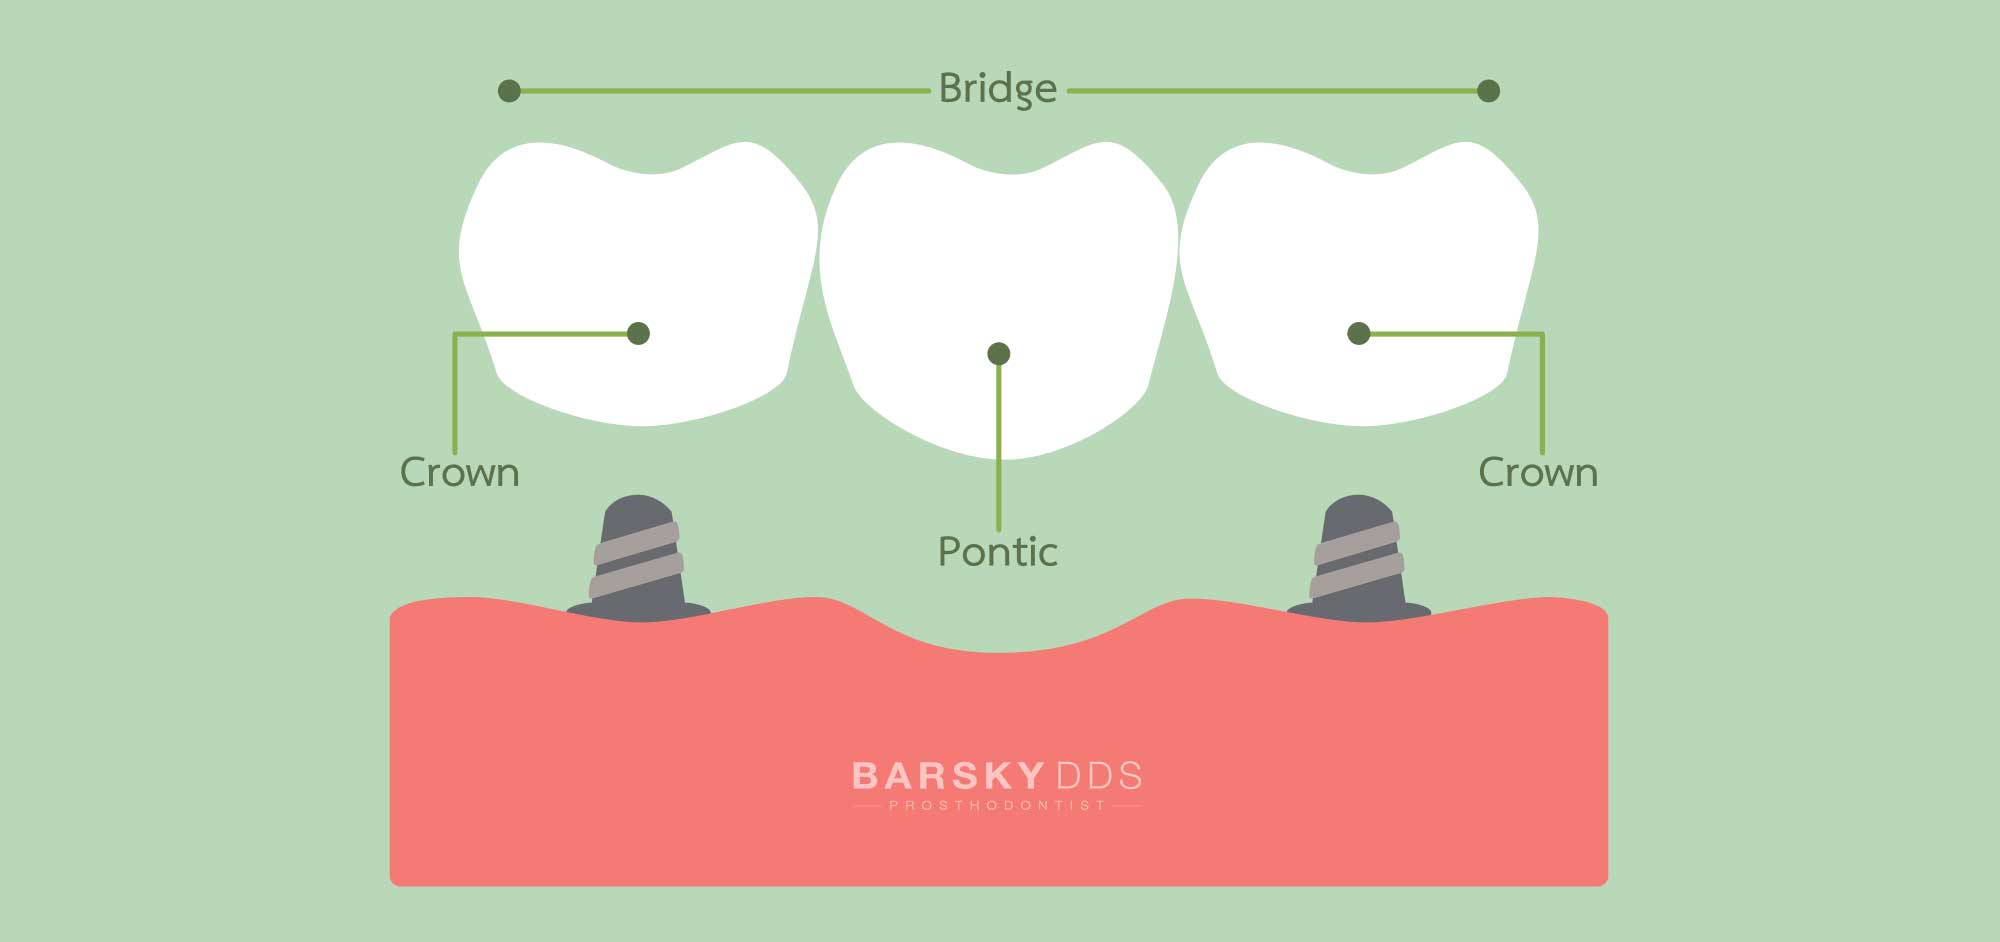 dental bridge parts